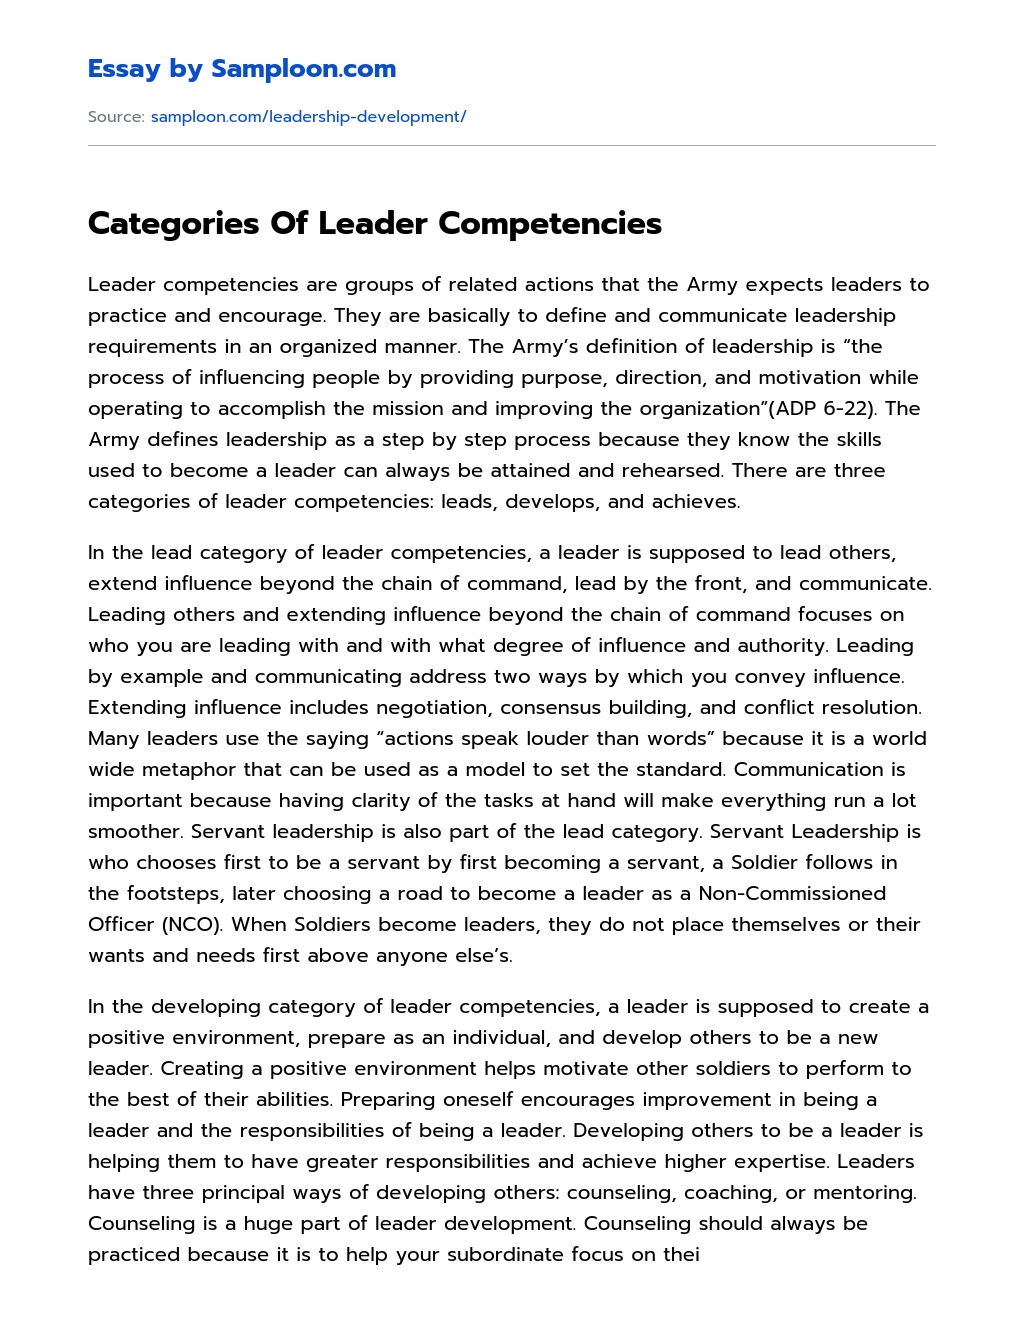 Categories Of Leader Competencies essay